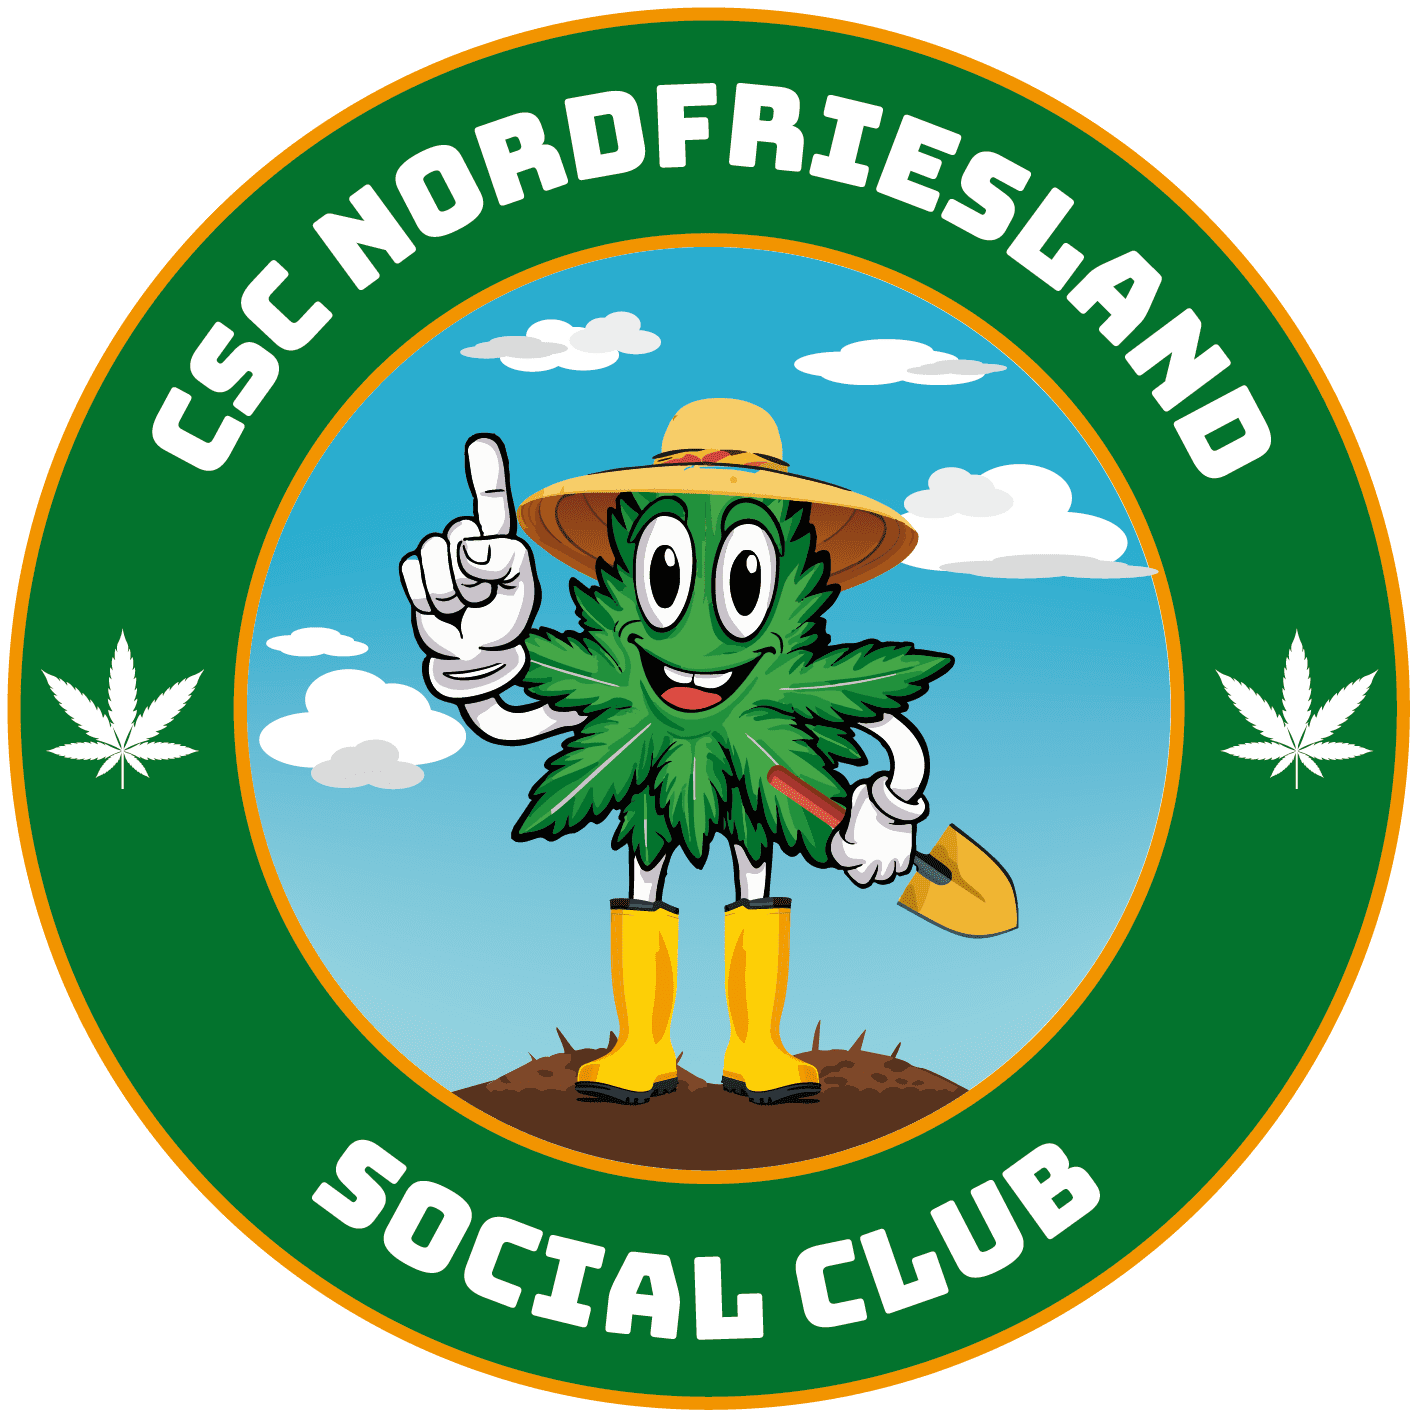 CSC Nordfriesland